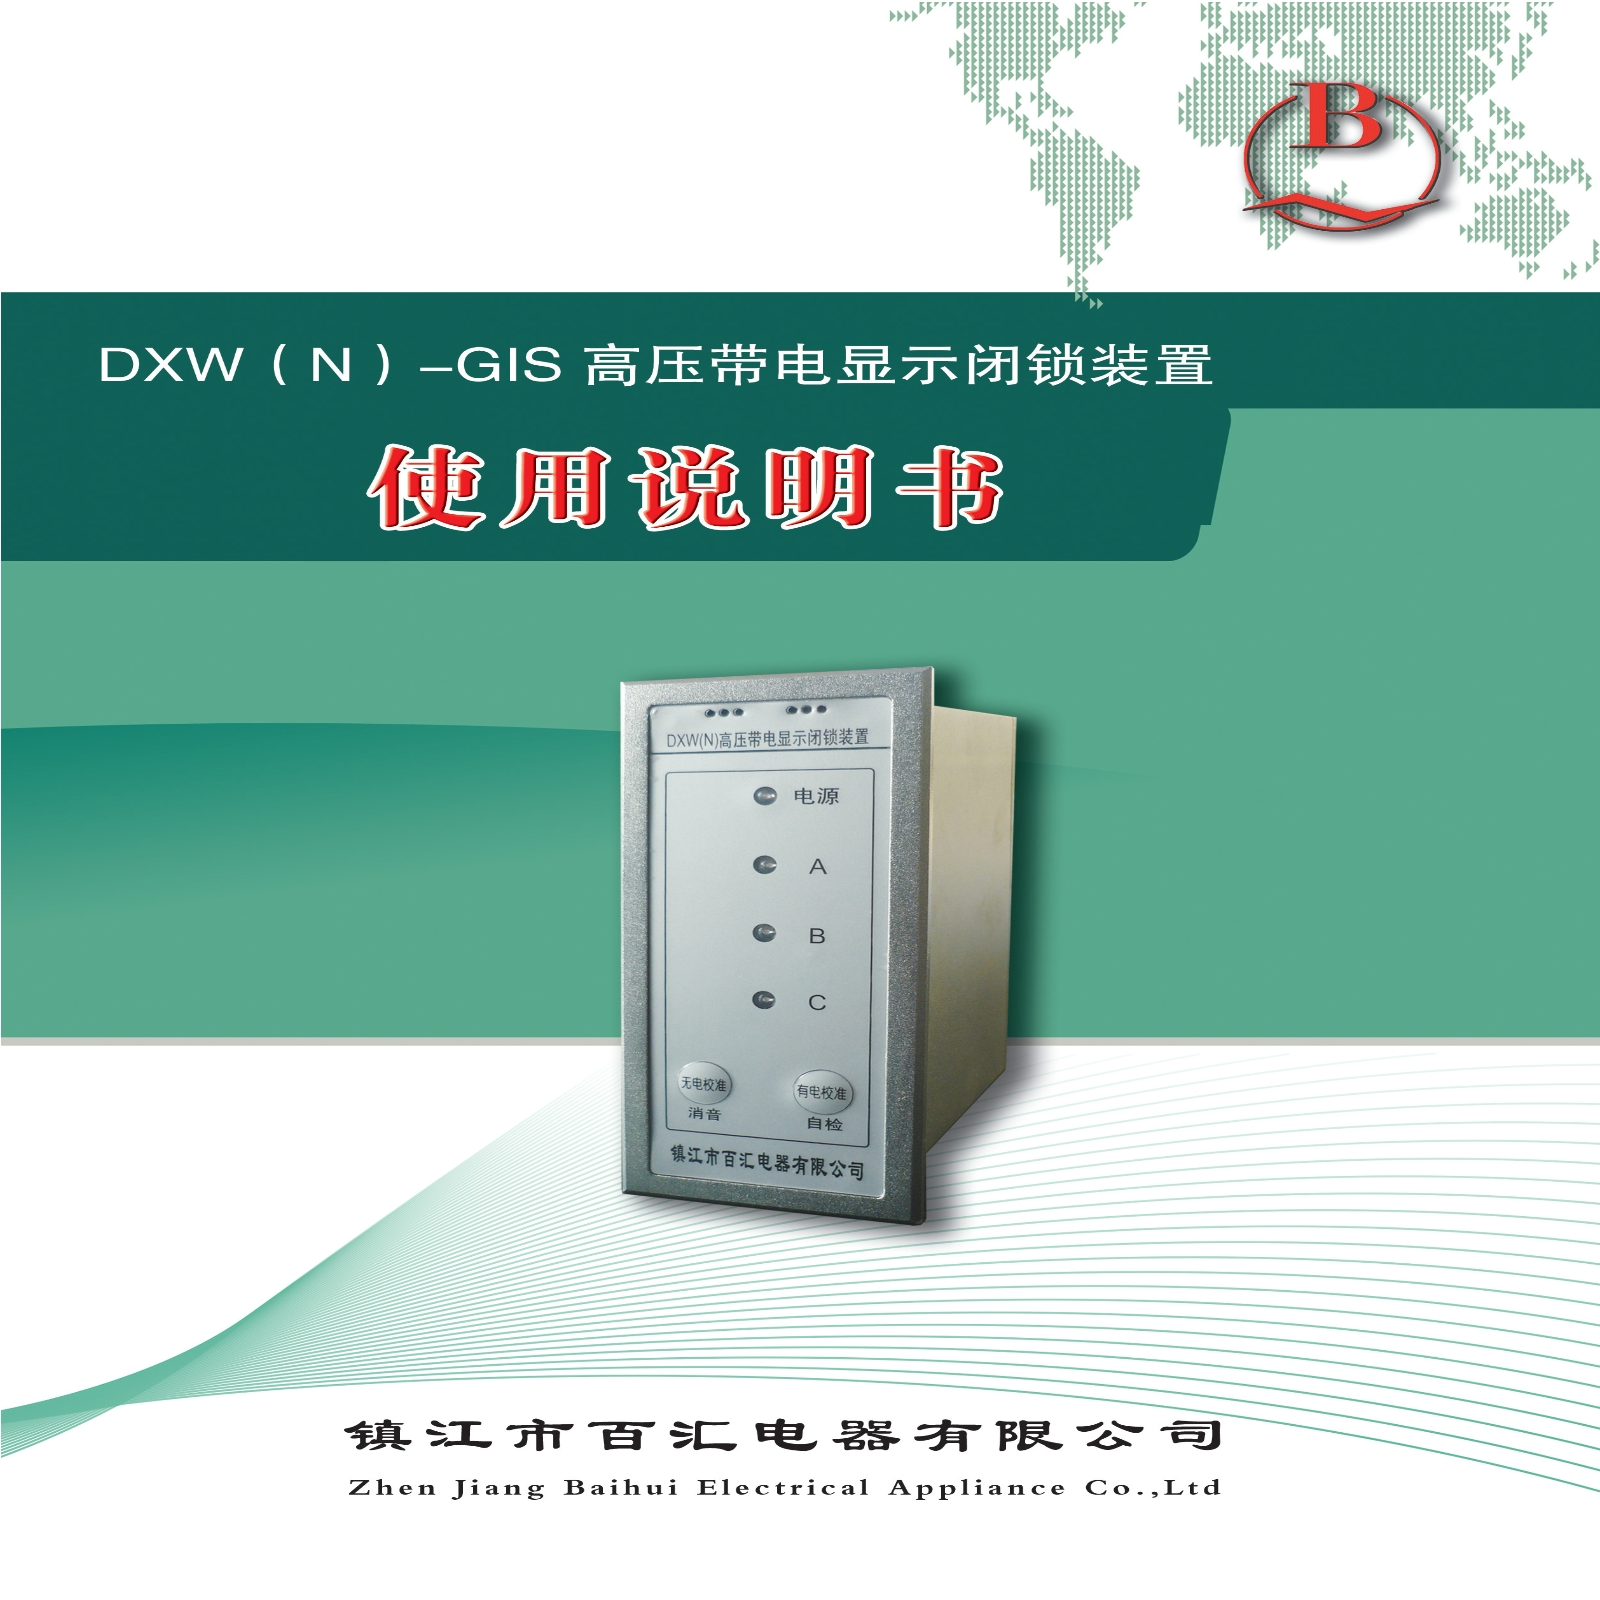 DXW(N)-GIS高压带电显示闭锁装置